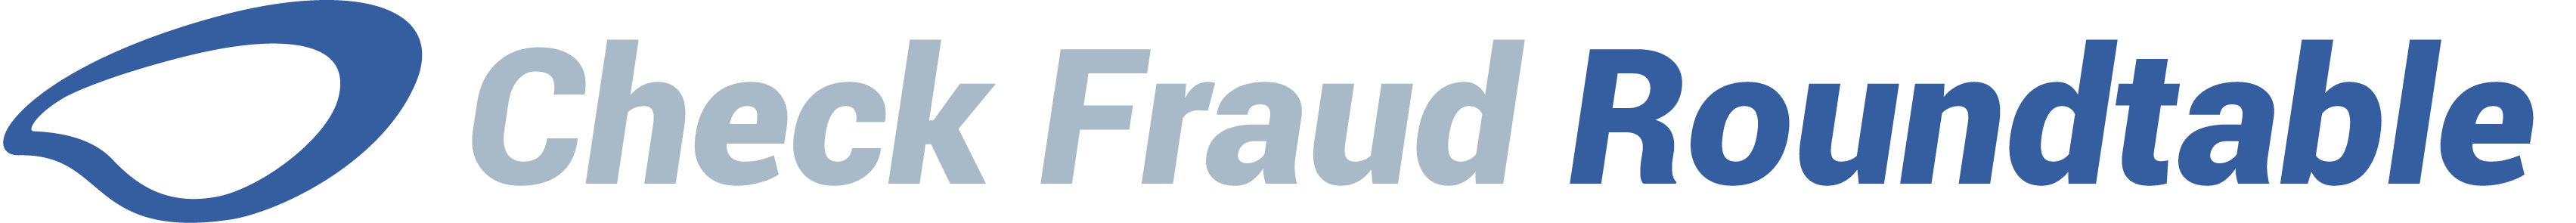 Check Fraud rountable logo long-01